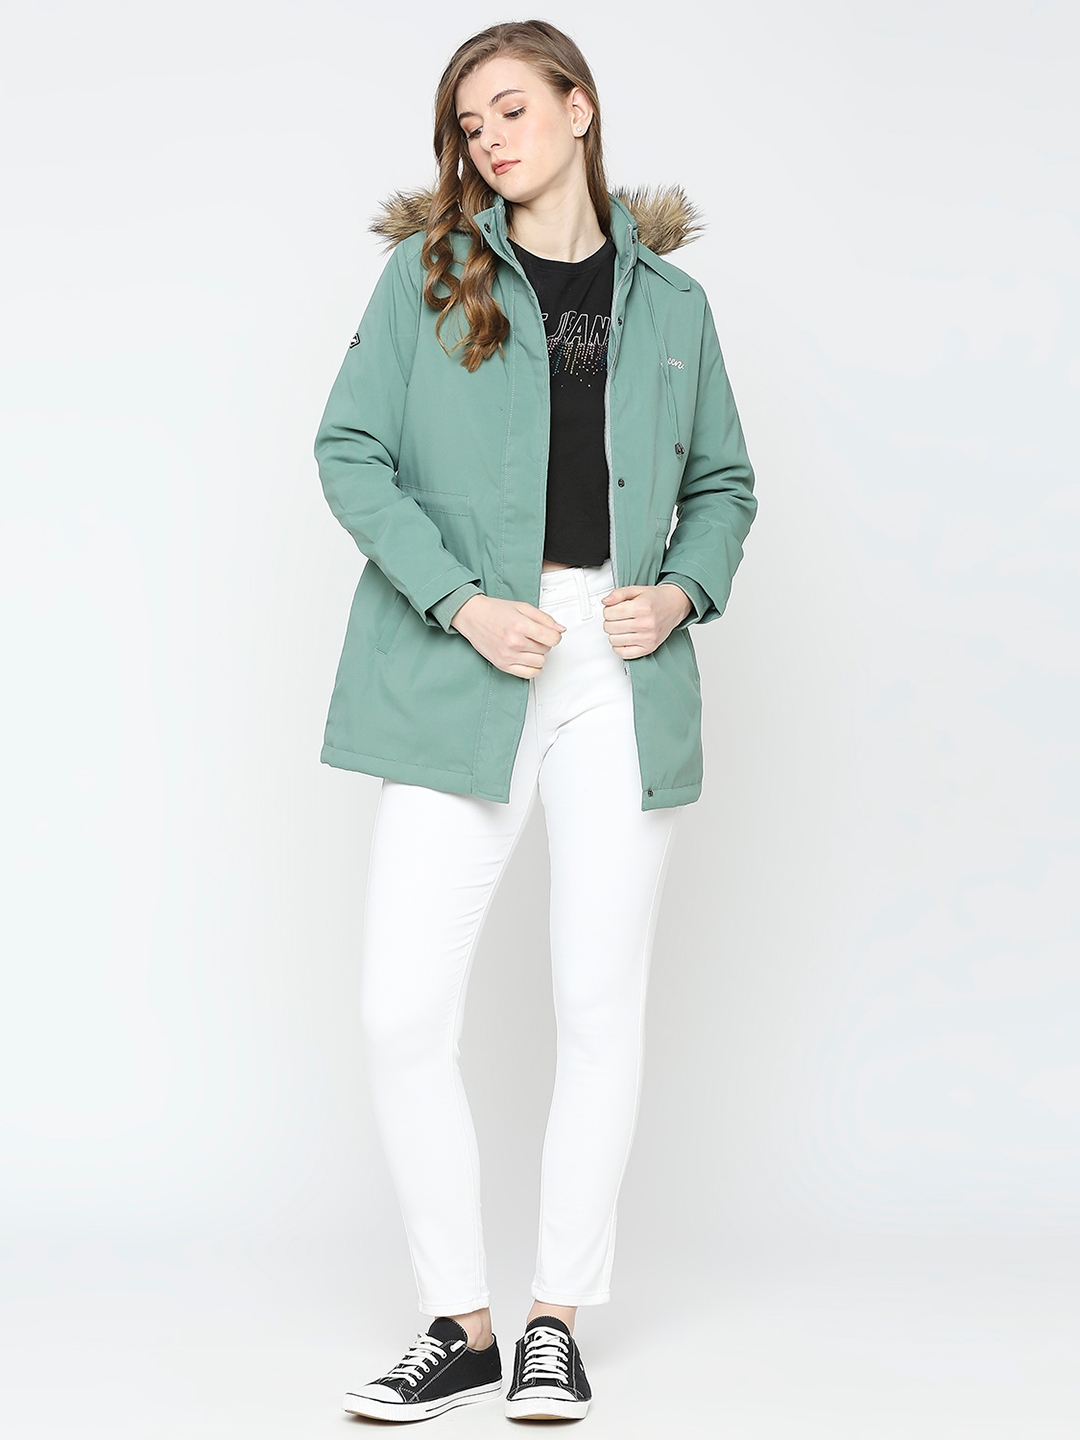 Spykar Women Sea Green Nylon Slim Fit Hooded Jacket